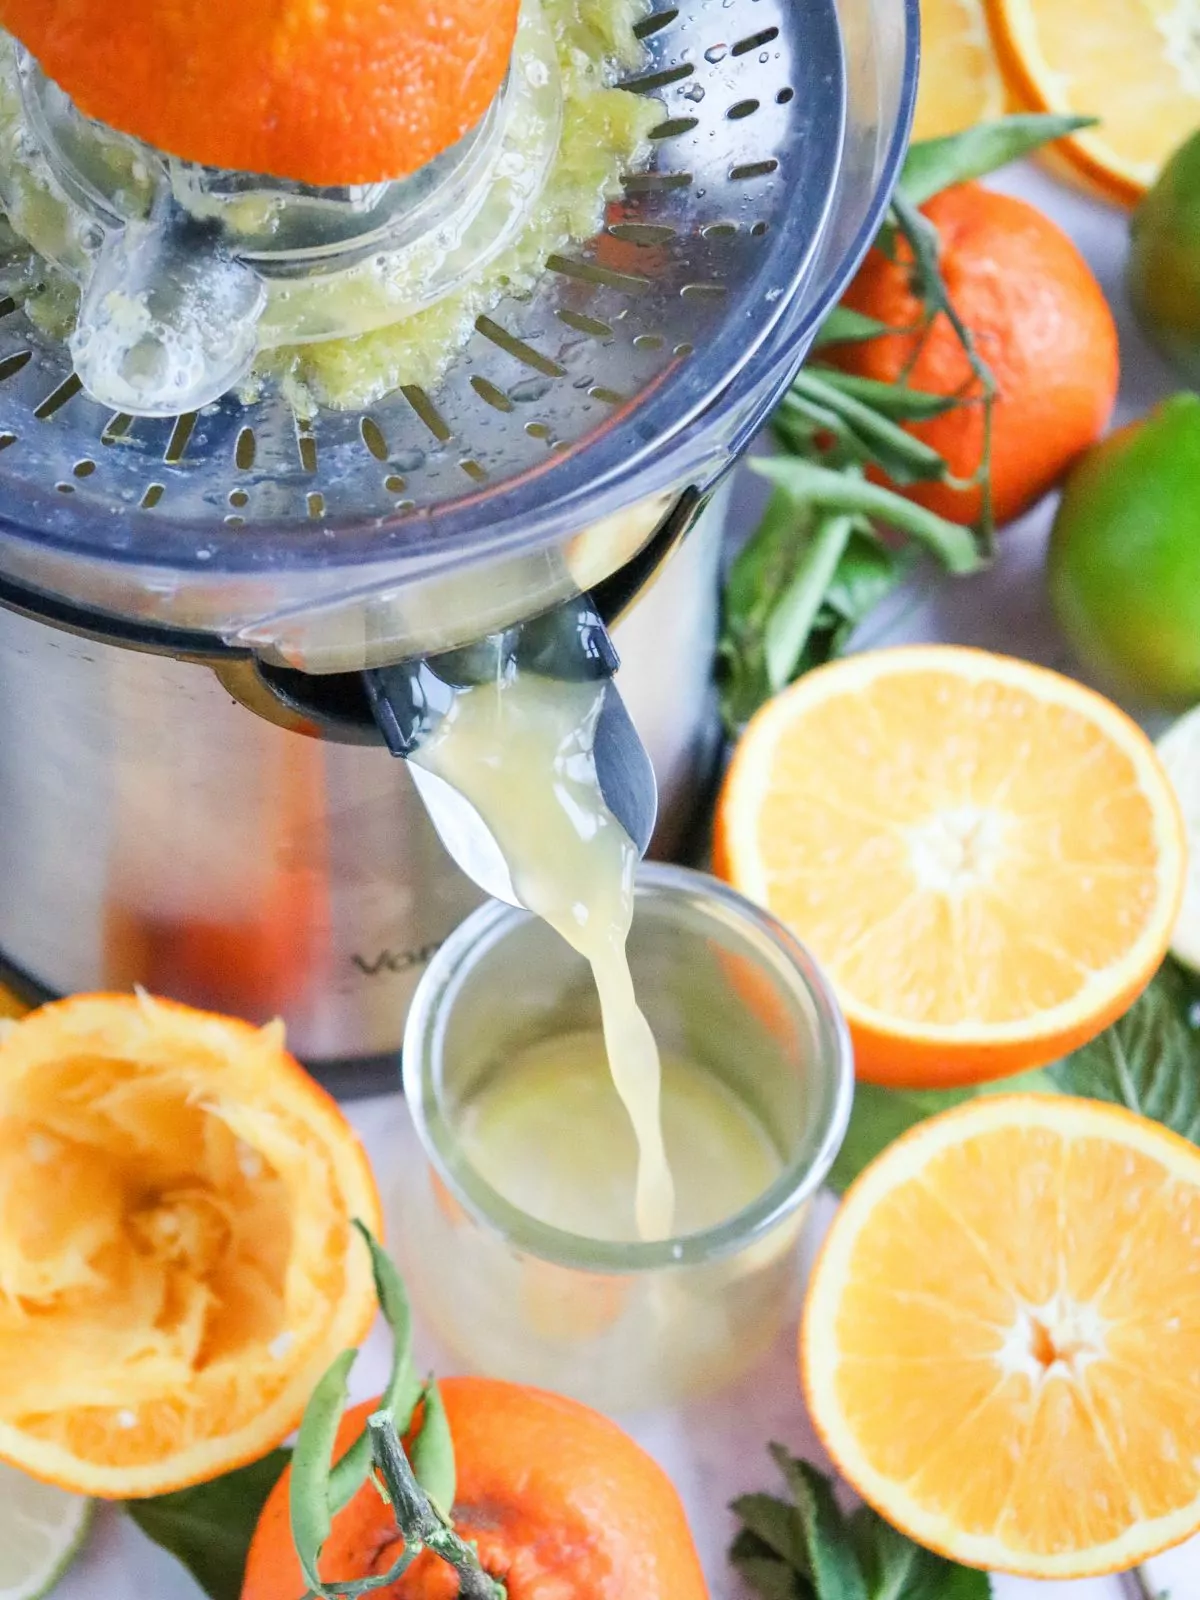 Using a juice machine to squeeze citrus.